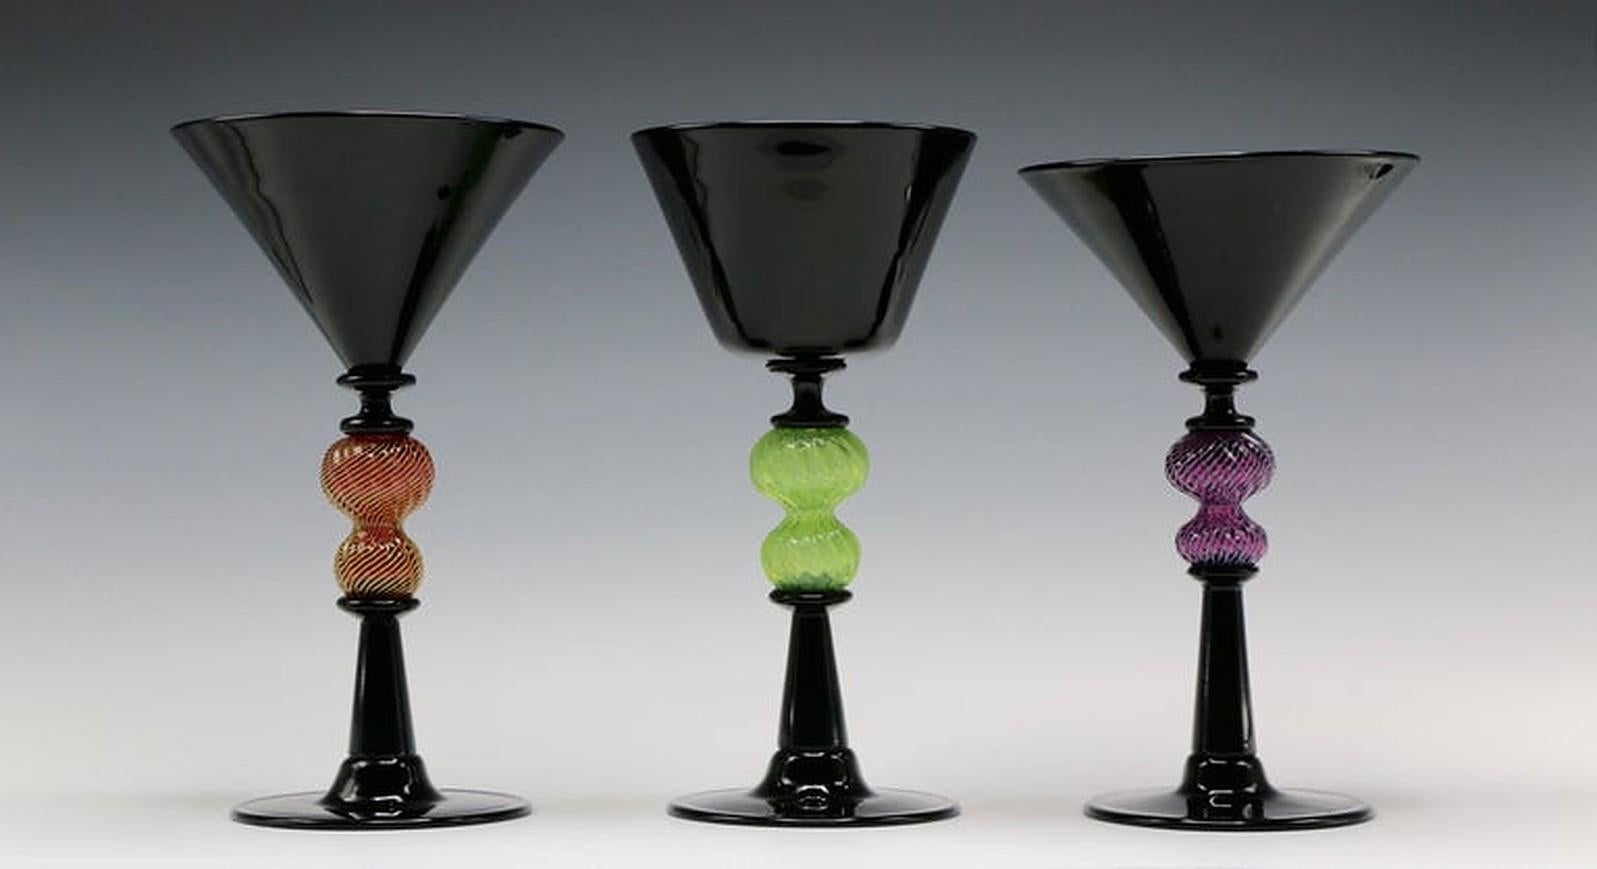 Black Goblet with Green Stem - Contemporary Art by Joshua Bernbaum